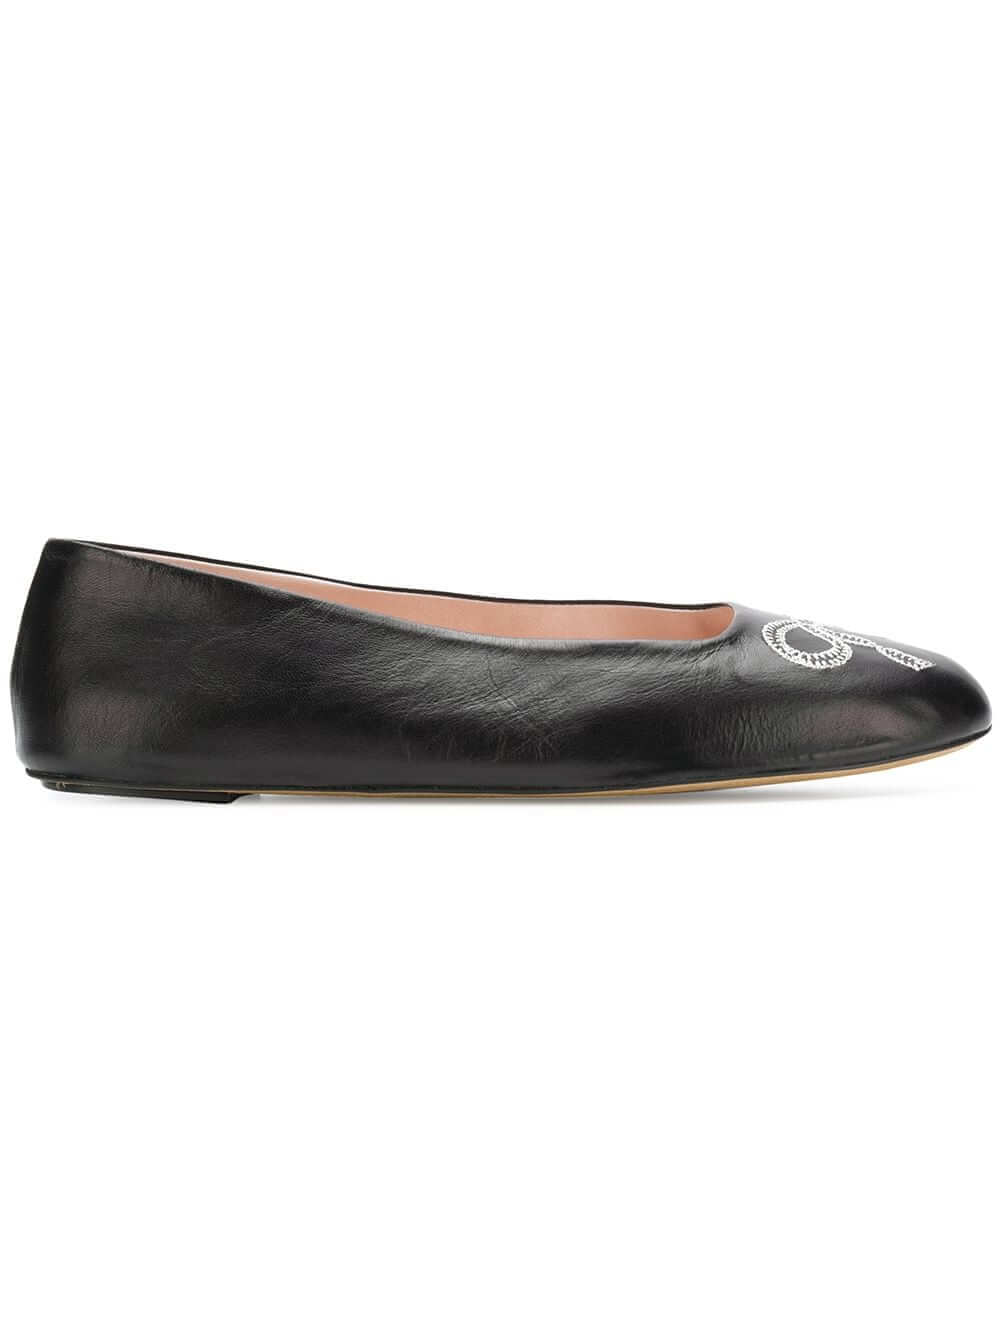 NEW Bally Ballyrina Women's 6223301 Black Plain Leather Shoes US 7.5 MSRP $425